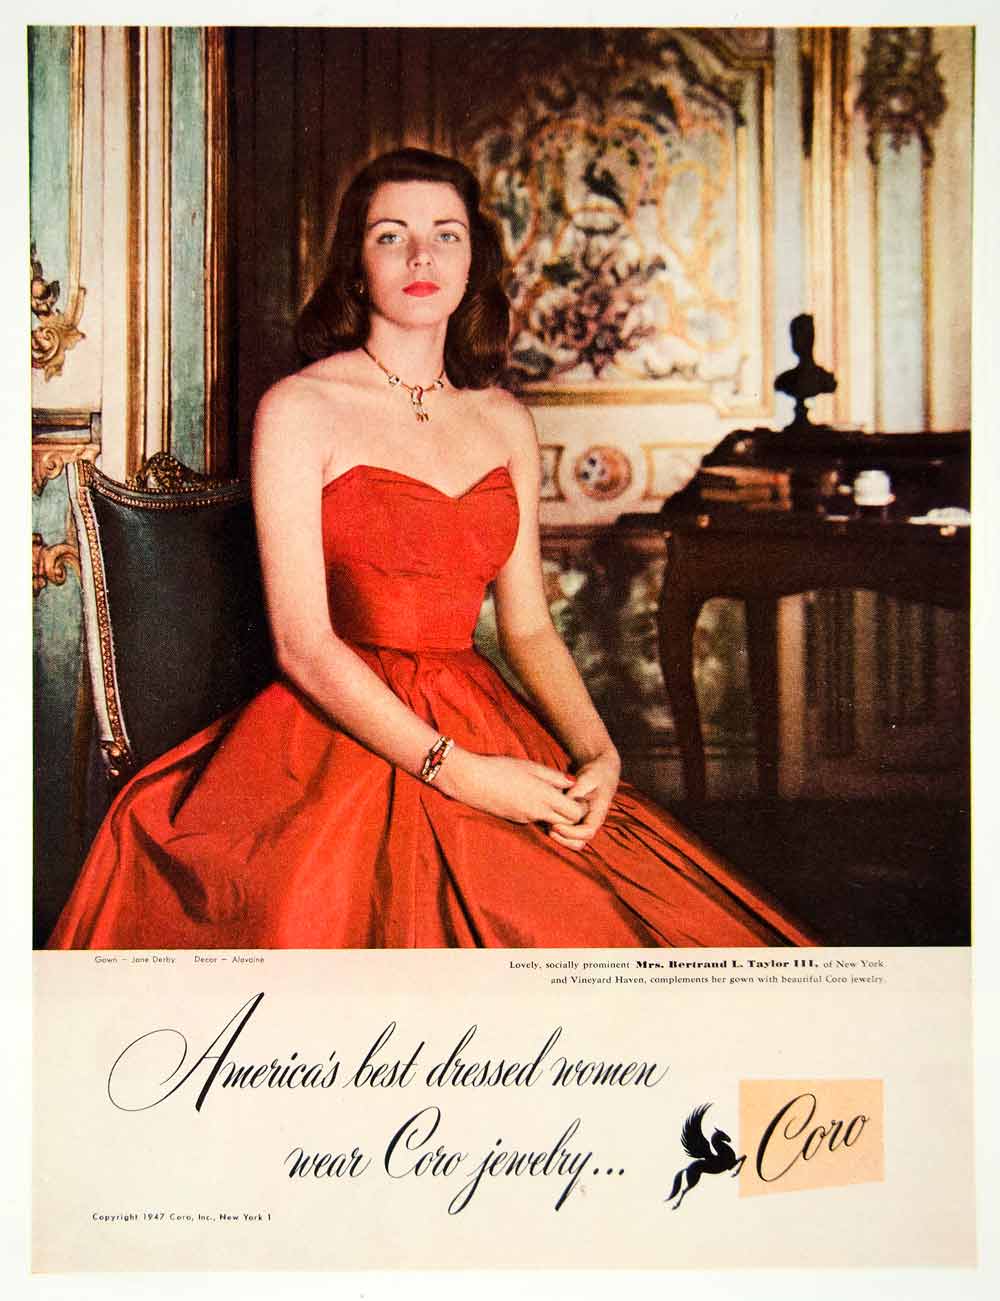 1947 Ad Coro Jewelry Jane Derby Red Gown Alavione Decor Bertrand L. Taylor YFT3